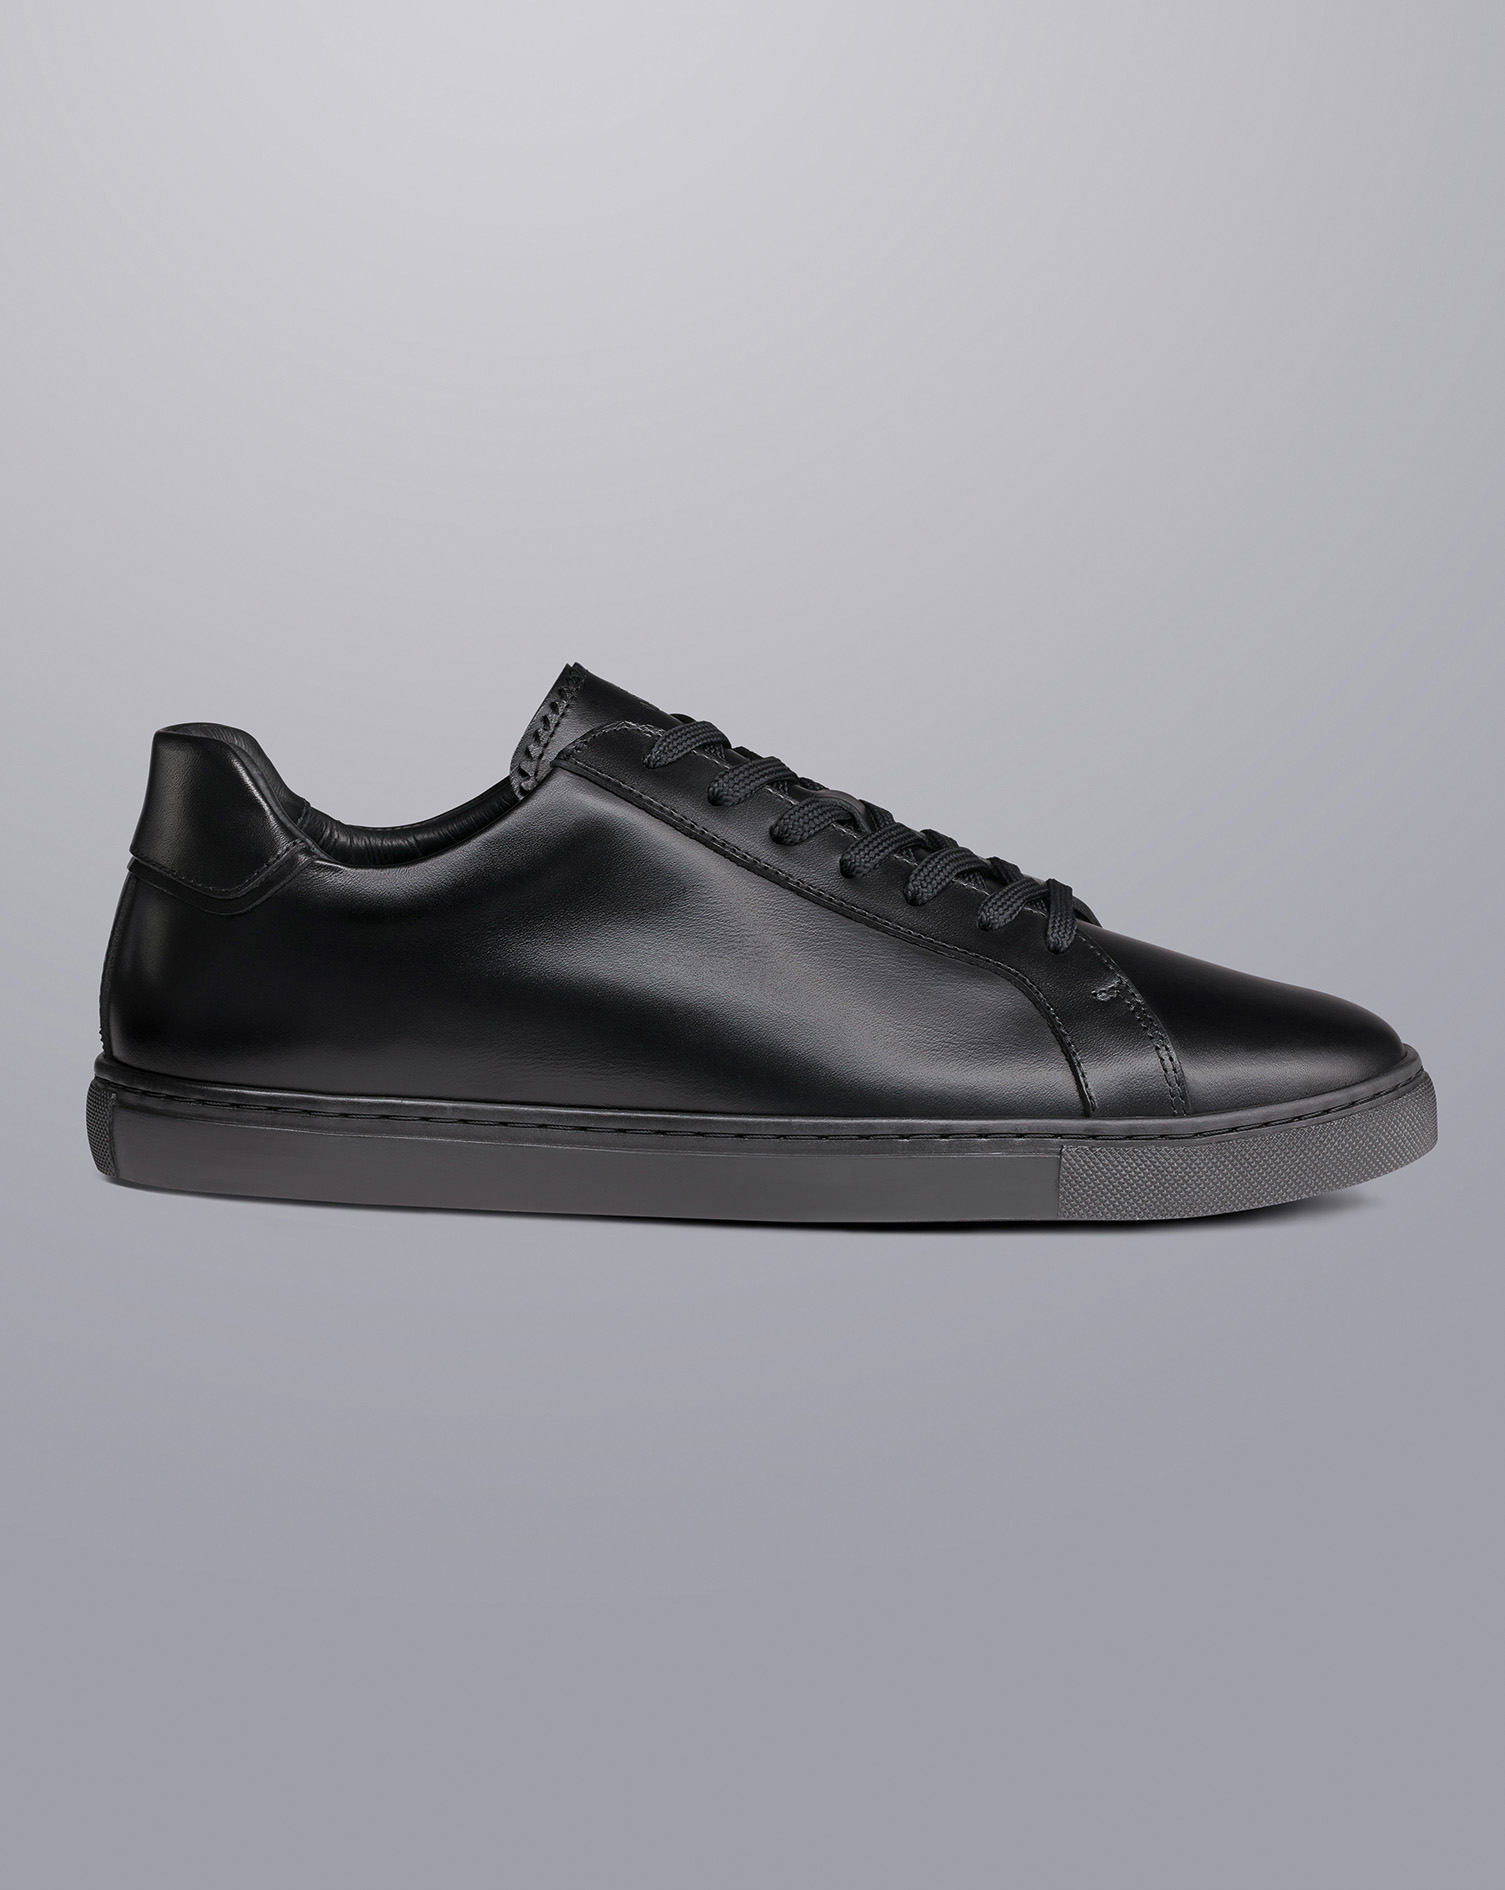 Men's Charles Tyrwhitt Leather Trainers - All Black Size 10
